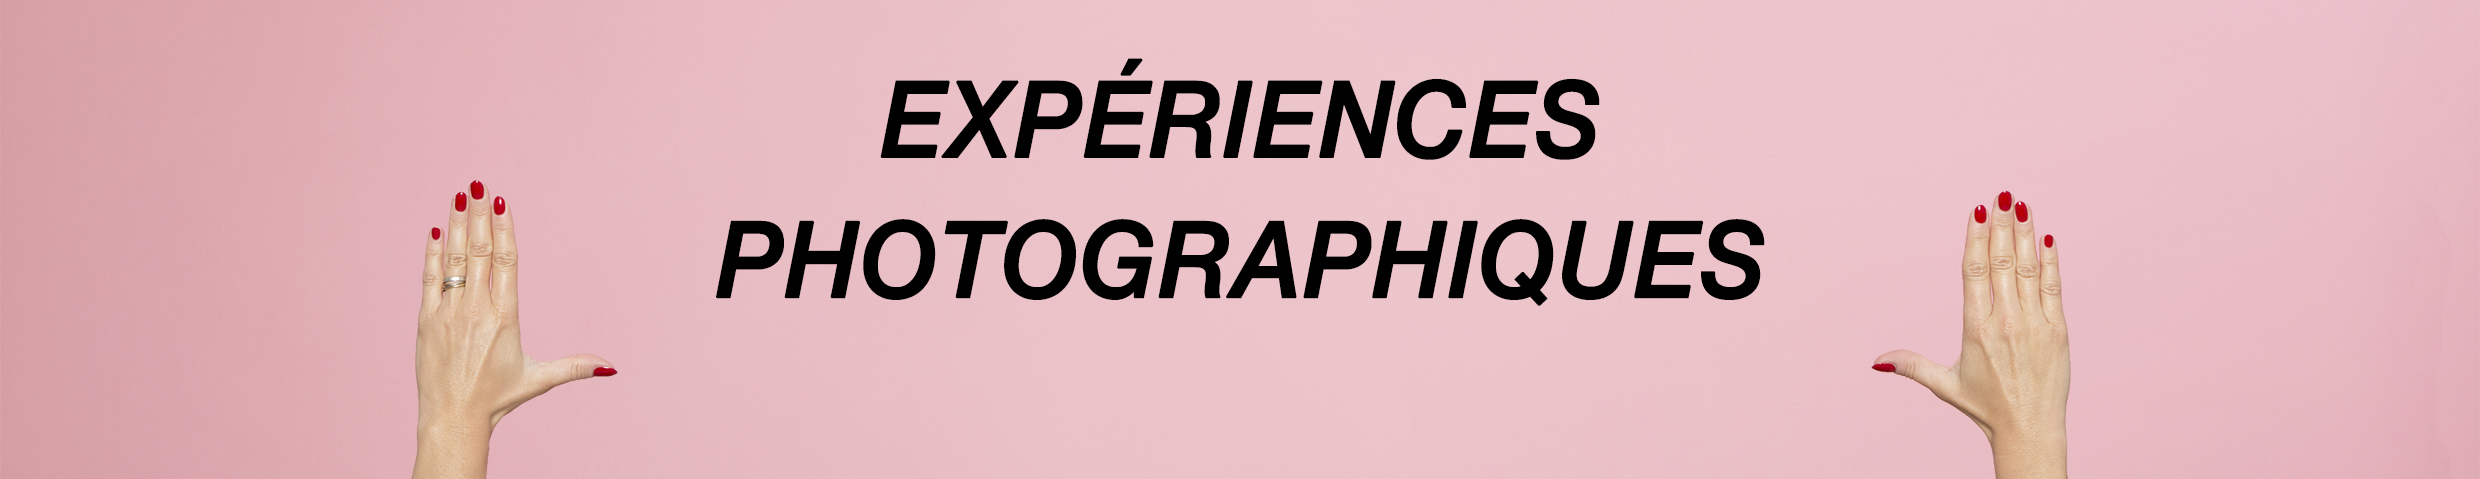 PAUSE experiences photographiques medium